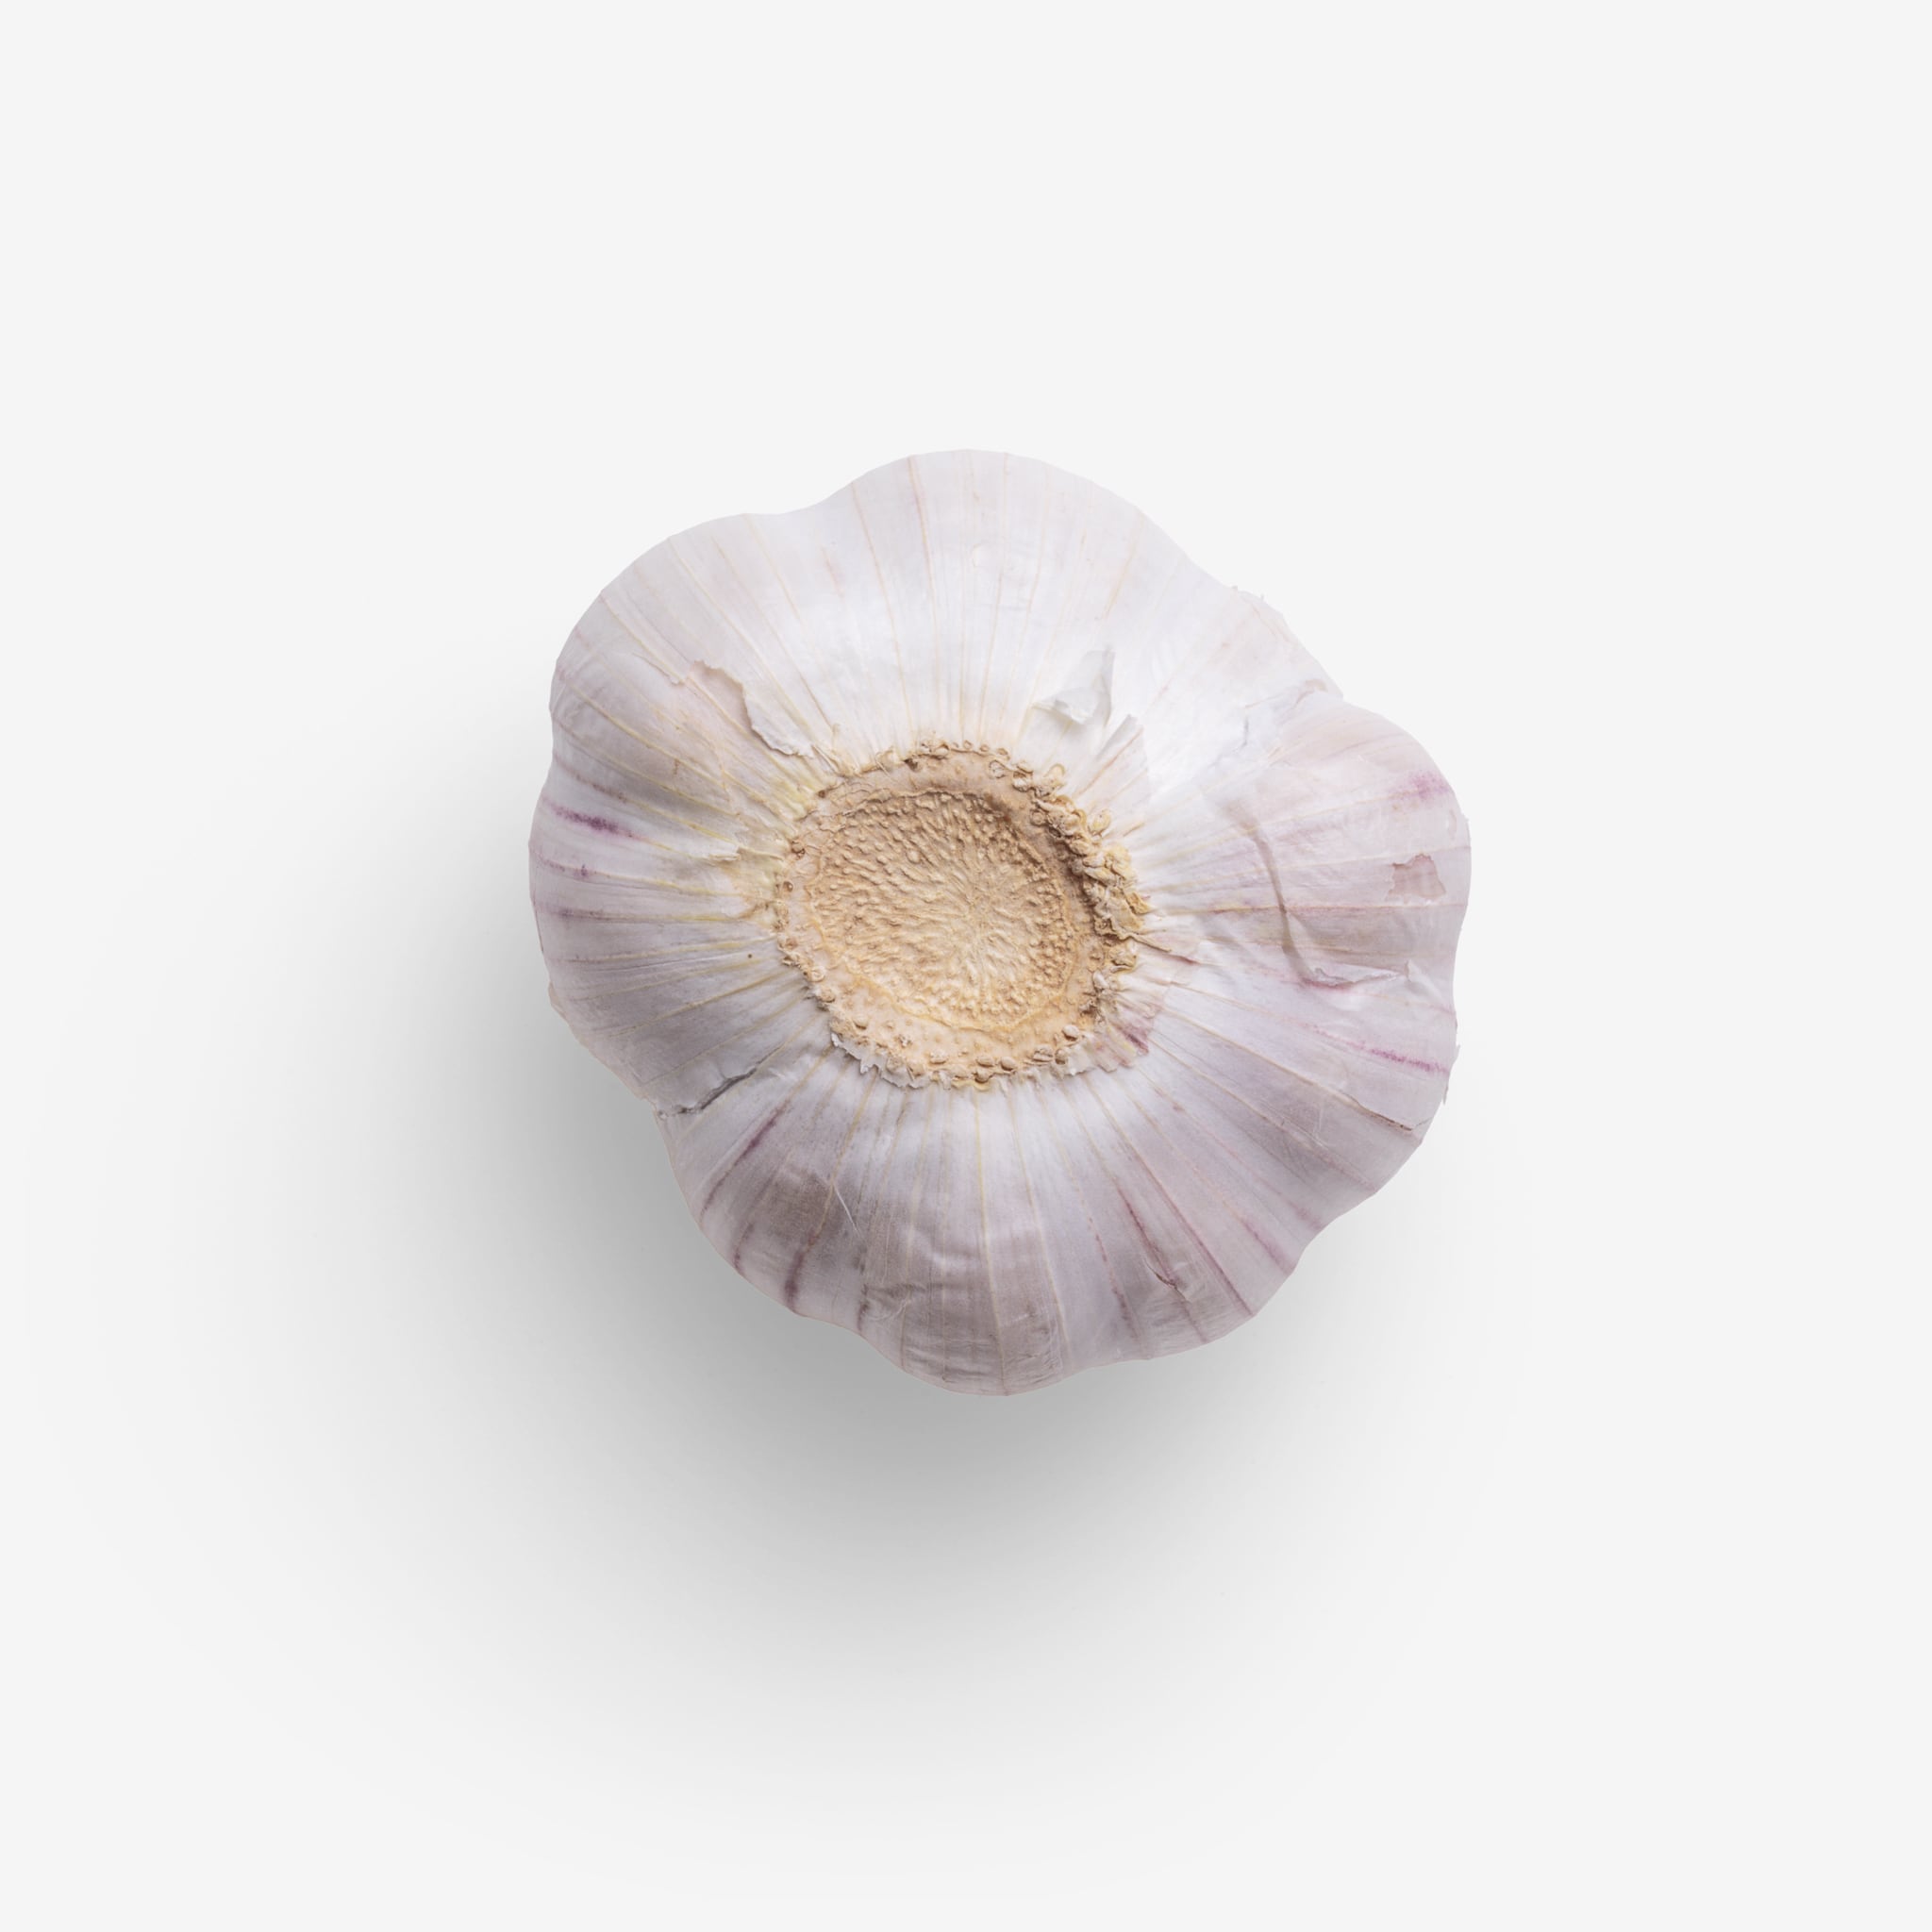 Garlic image asset with transparent background